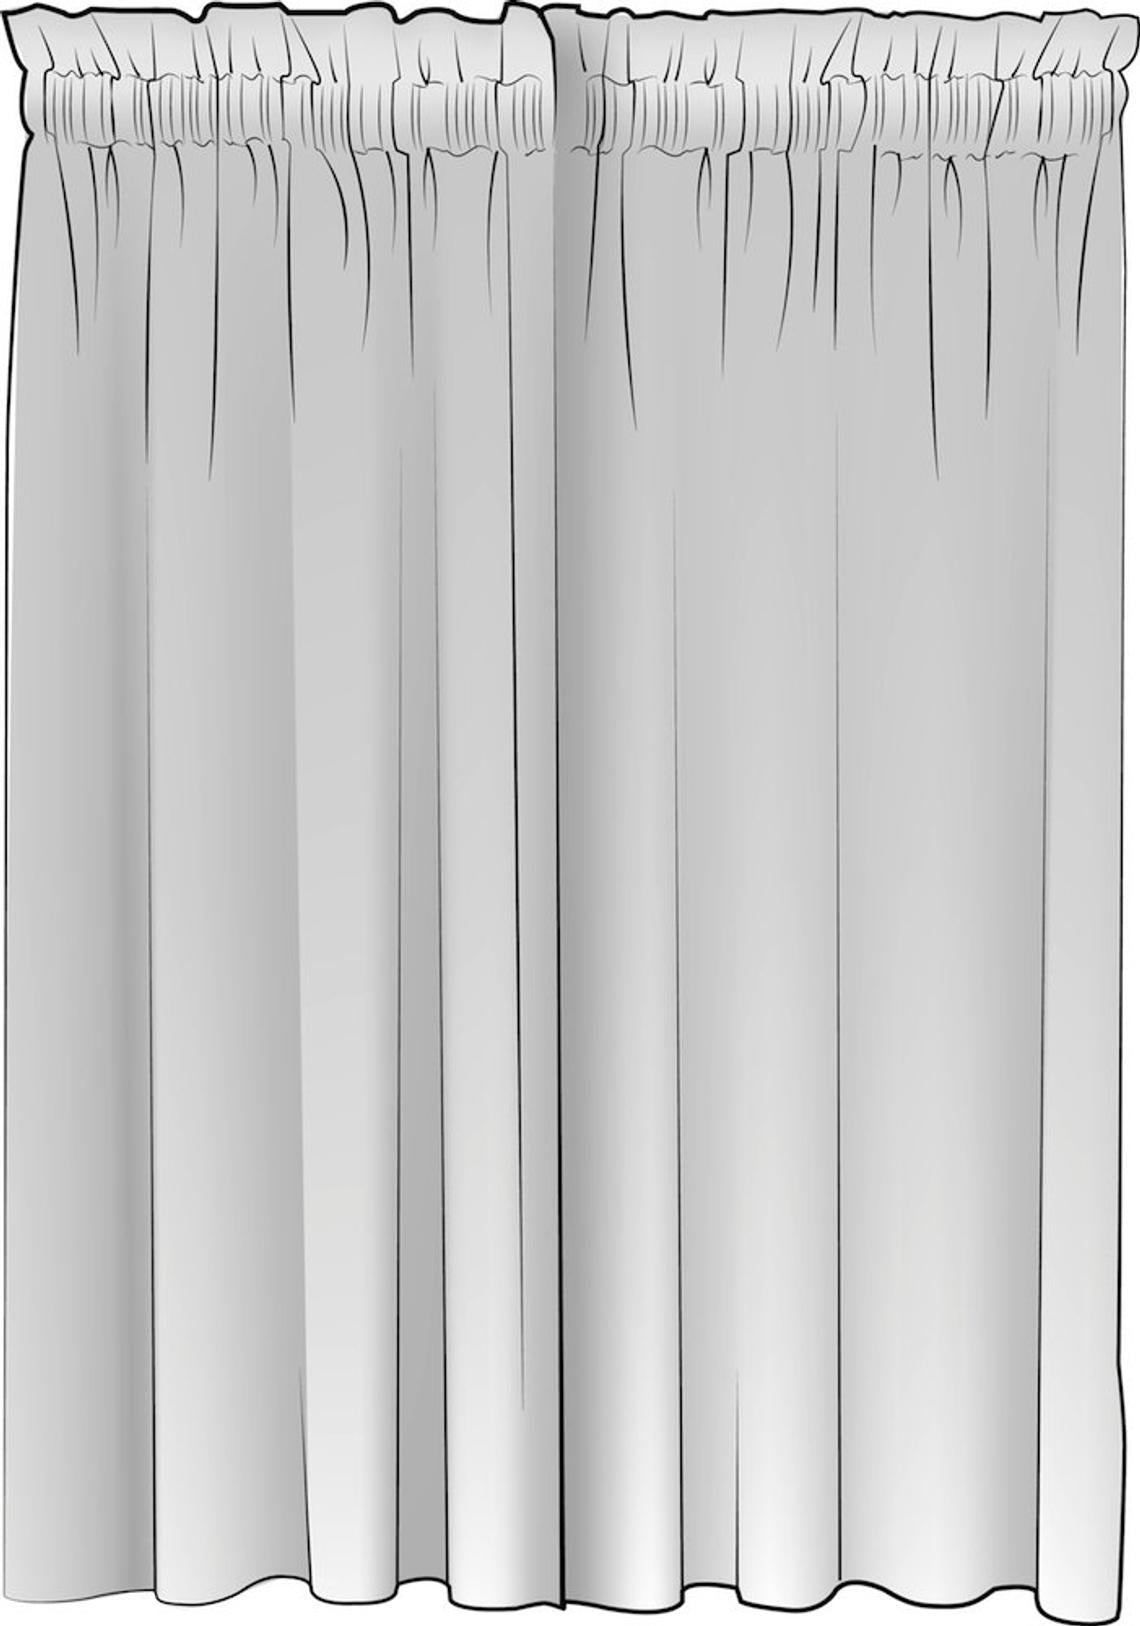 rod pocket curtain panels pair in modern farmhouse abbot french grey windowpane plaid